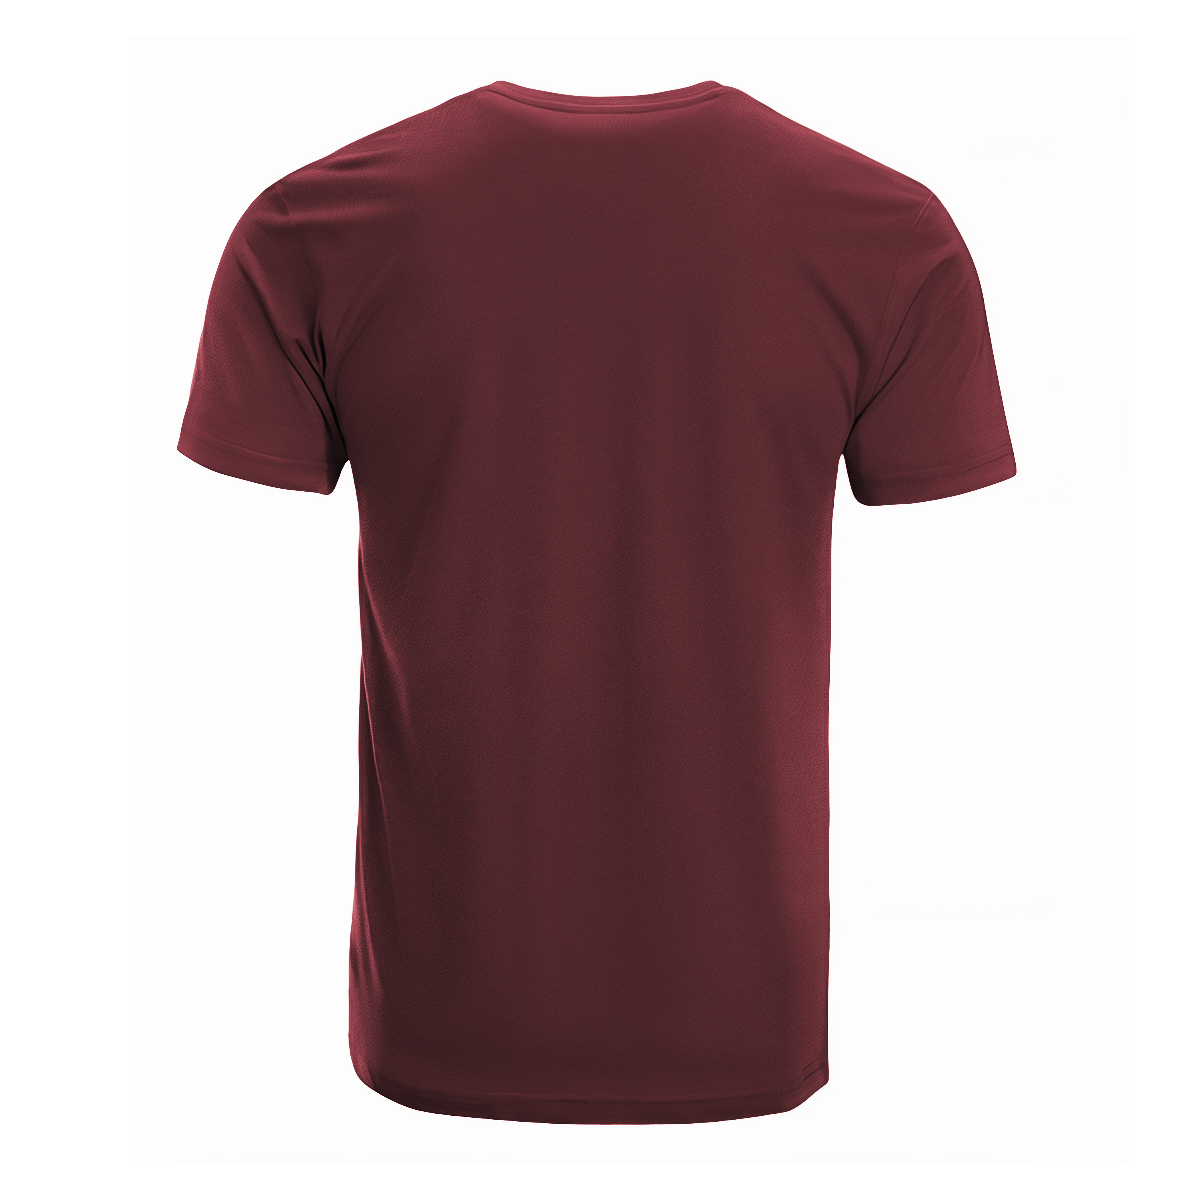 Walker Tartan Crest T-shirt - I'm not yelling style